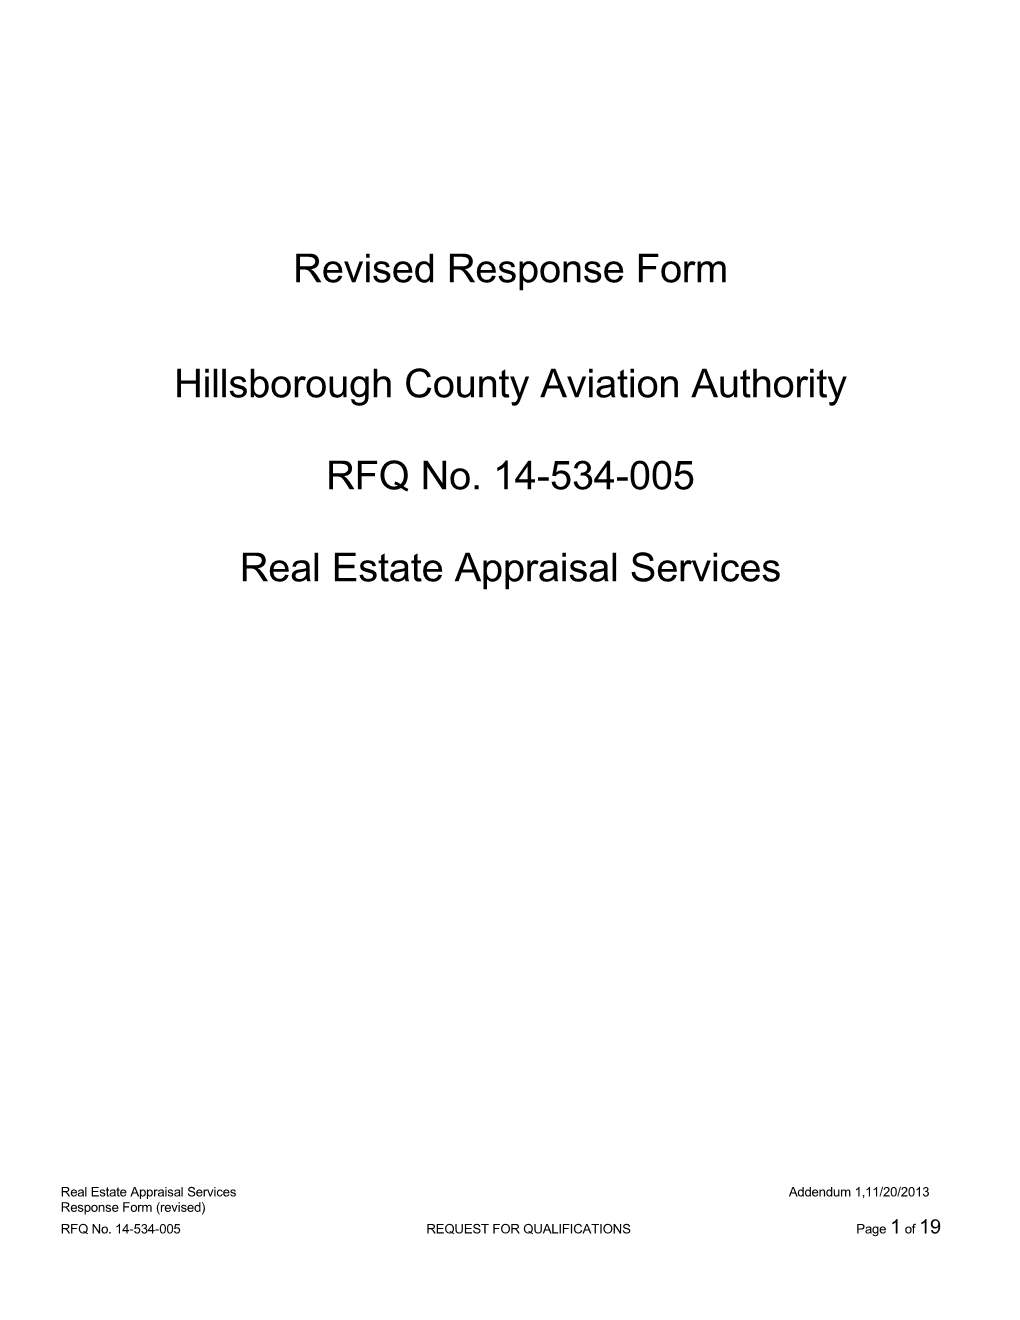 Hillsborough County Aviation Authority